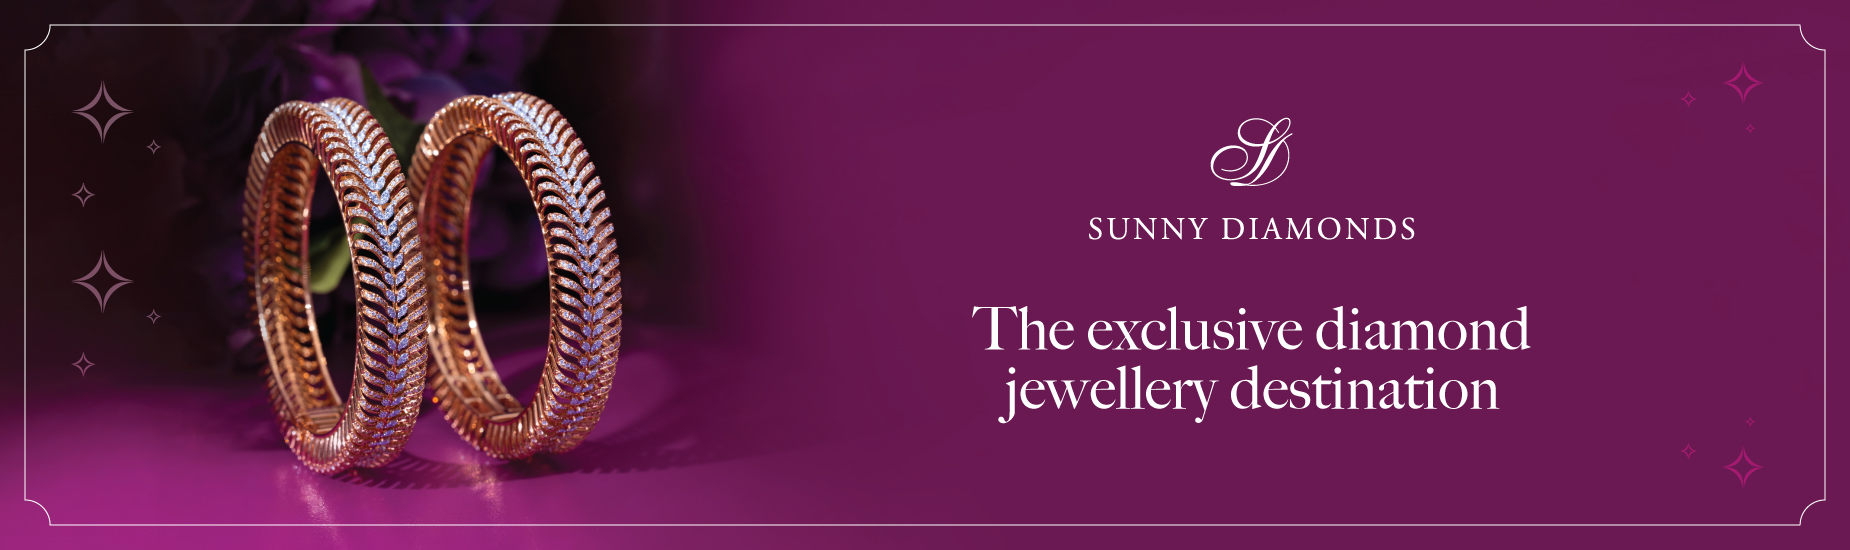 Buy Diamonds Online | Diamond Jewellery Store - Sunny Diamonds